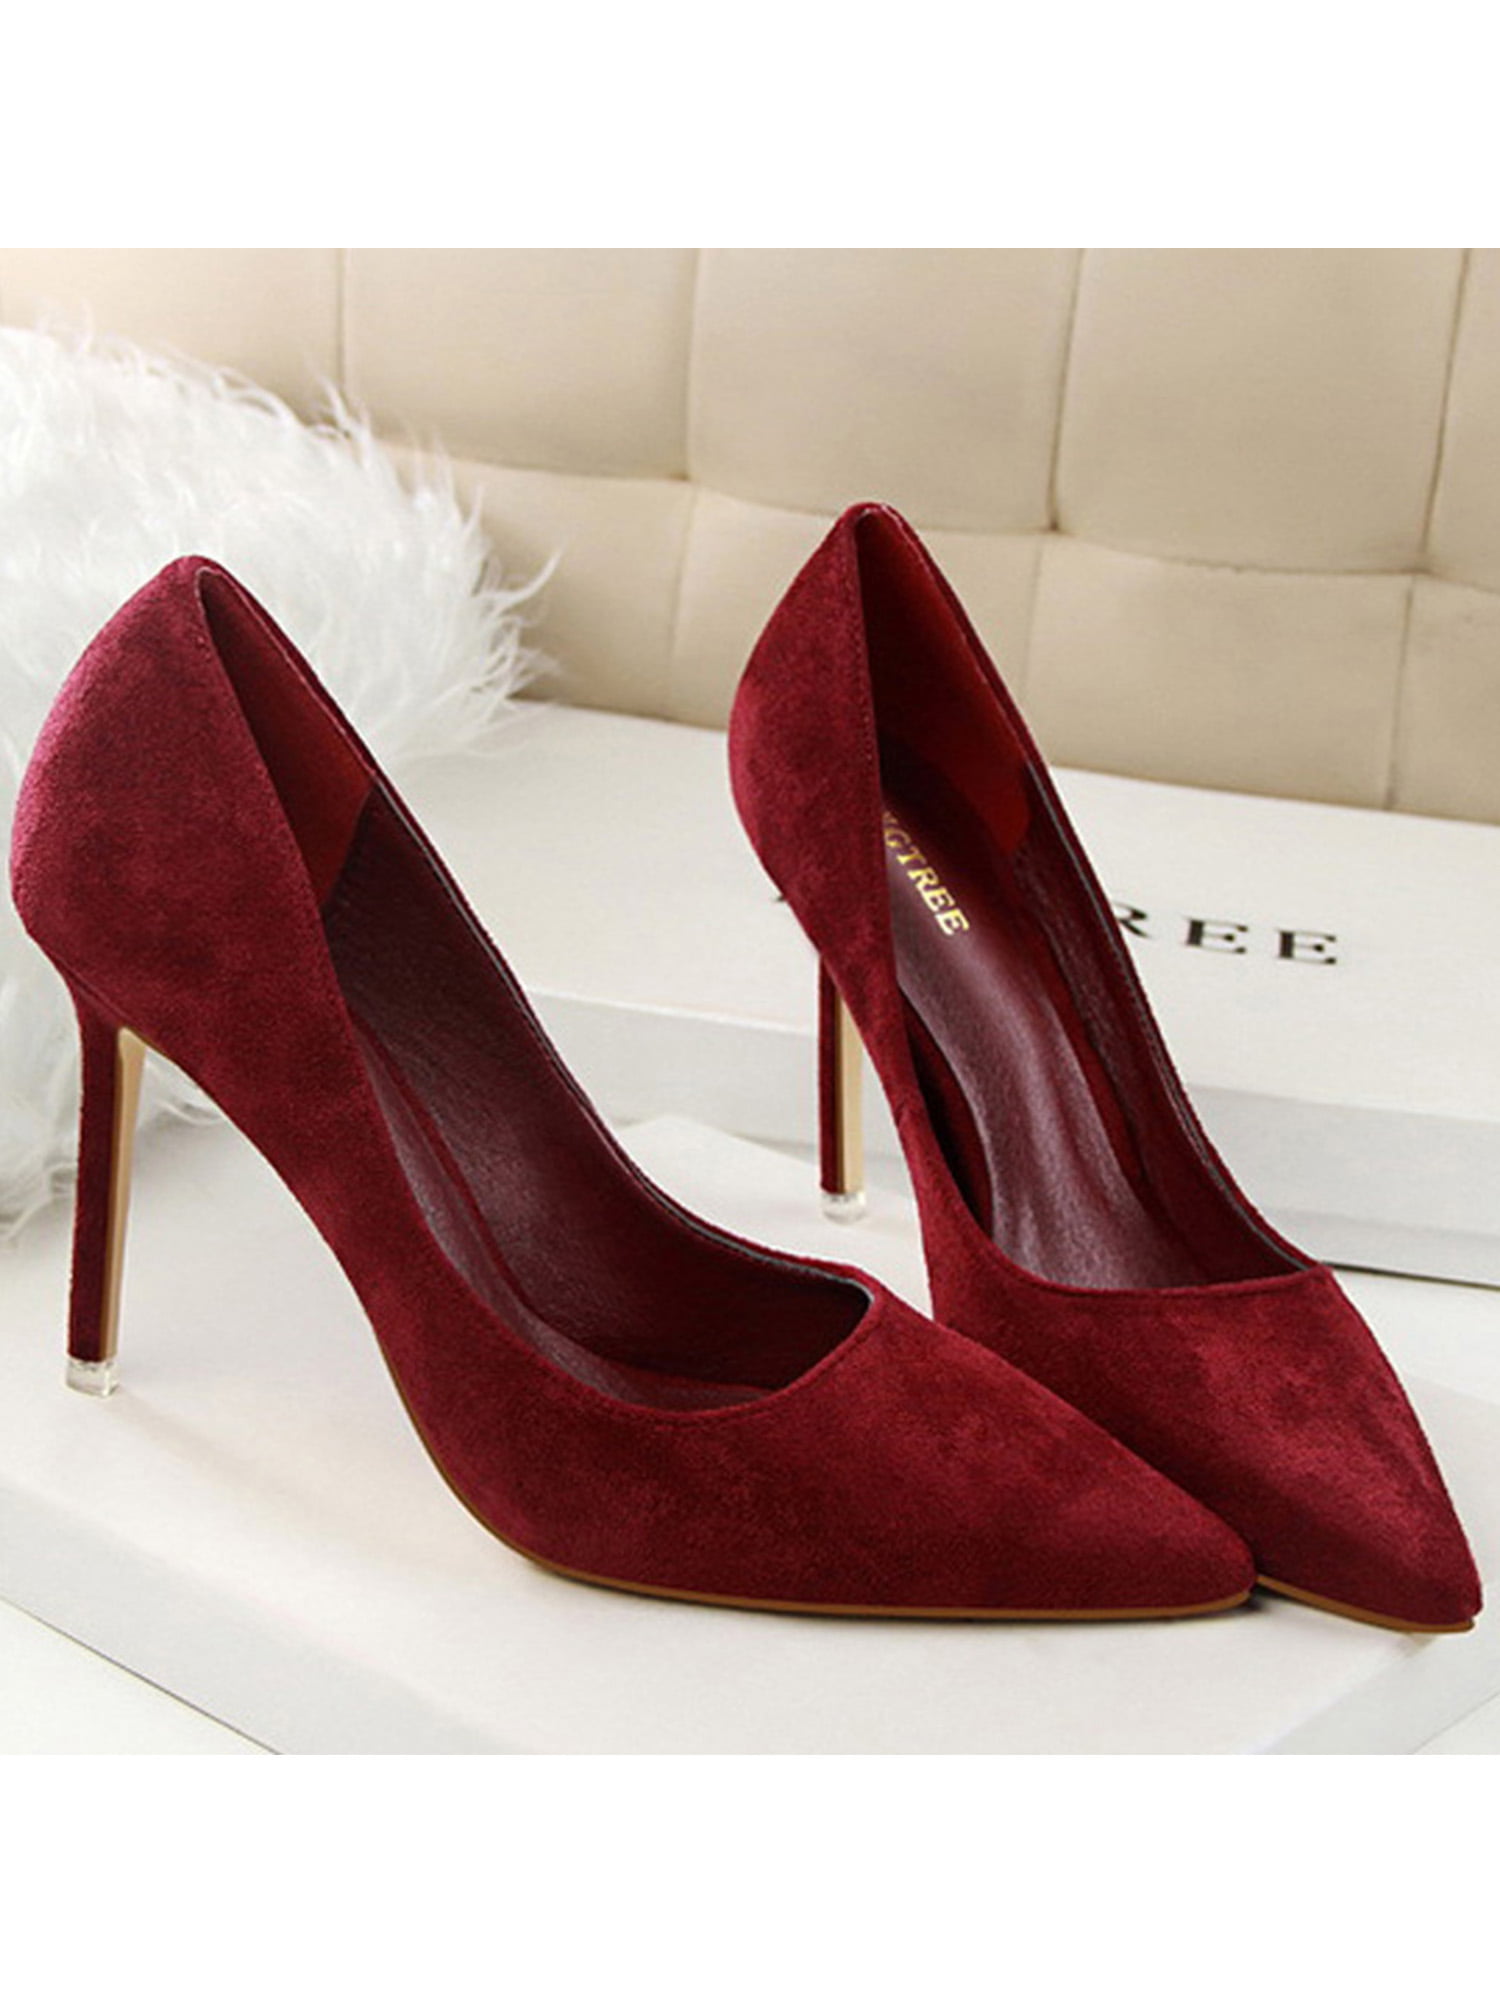 Bheema Heels For Women Women's High Heels, Shoes Combine Everything,  Women's Shoes And High Heels, Classic Narrow Pointed Red High Heels (Color  : Dark blue, Size : 44) price in UAE | Amazon UAE | kanbkam